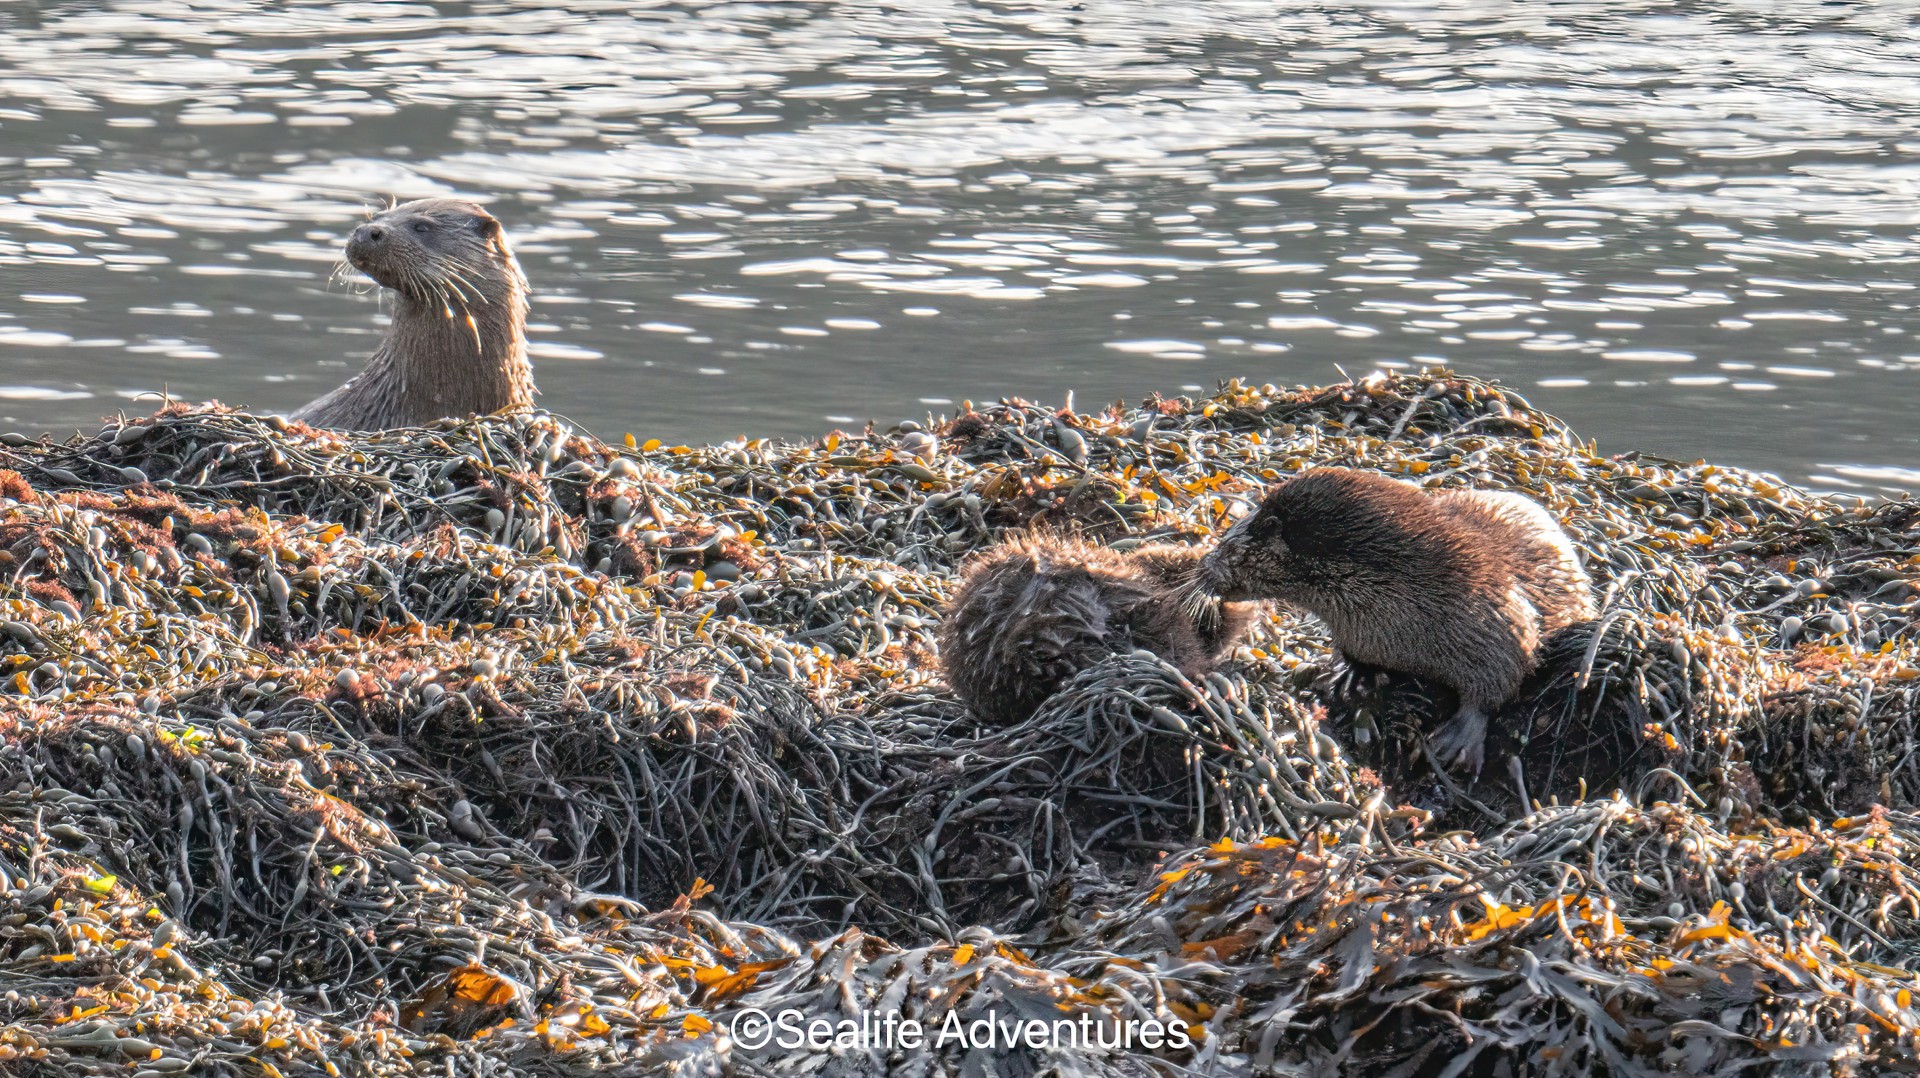 Background image - 3 Otters